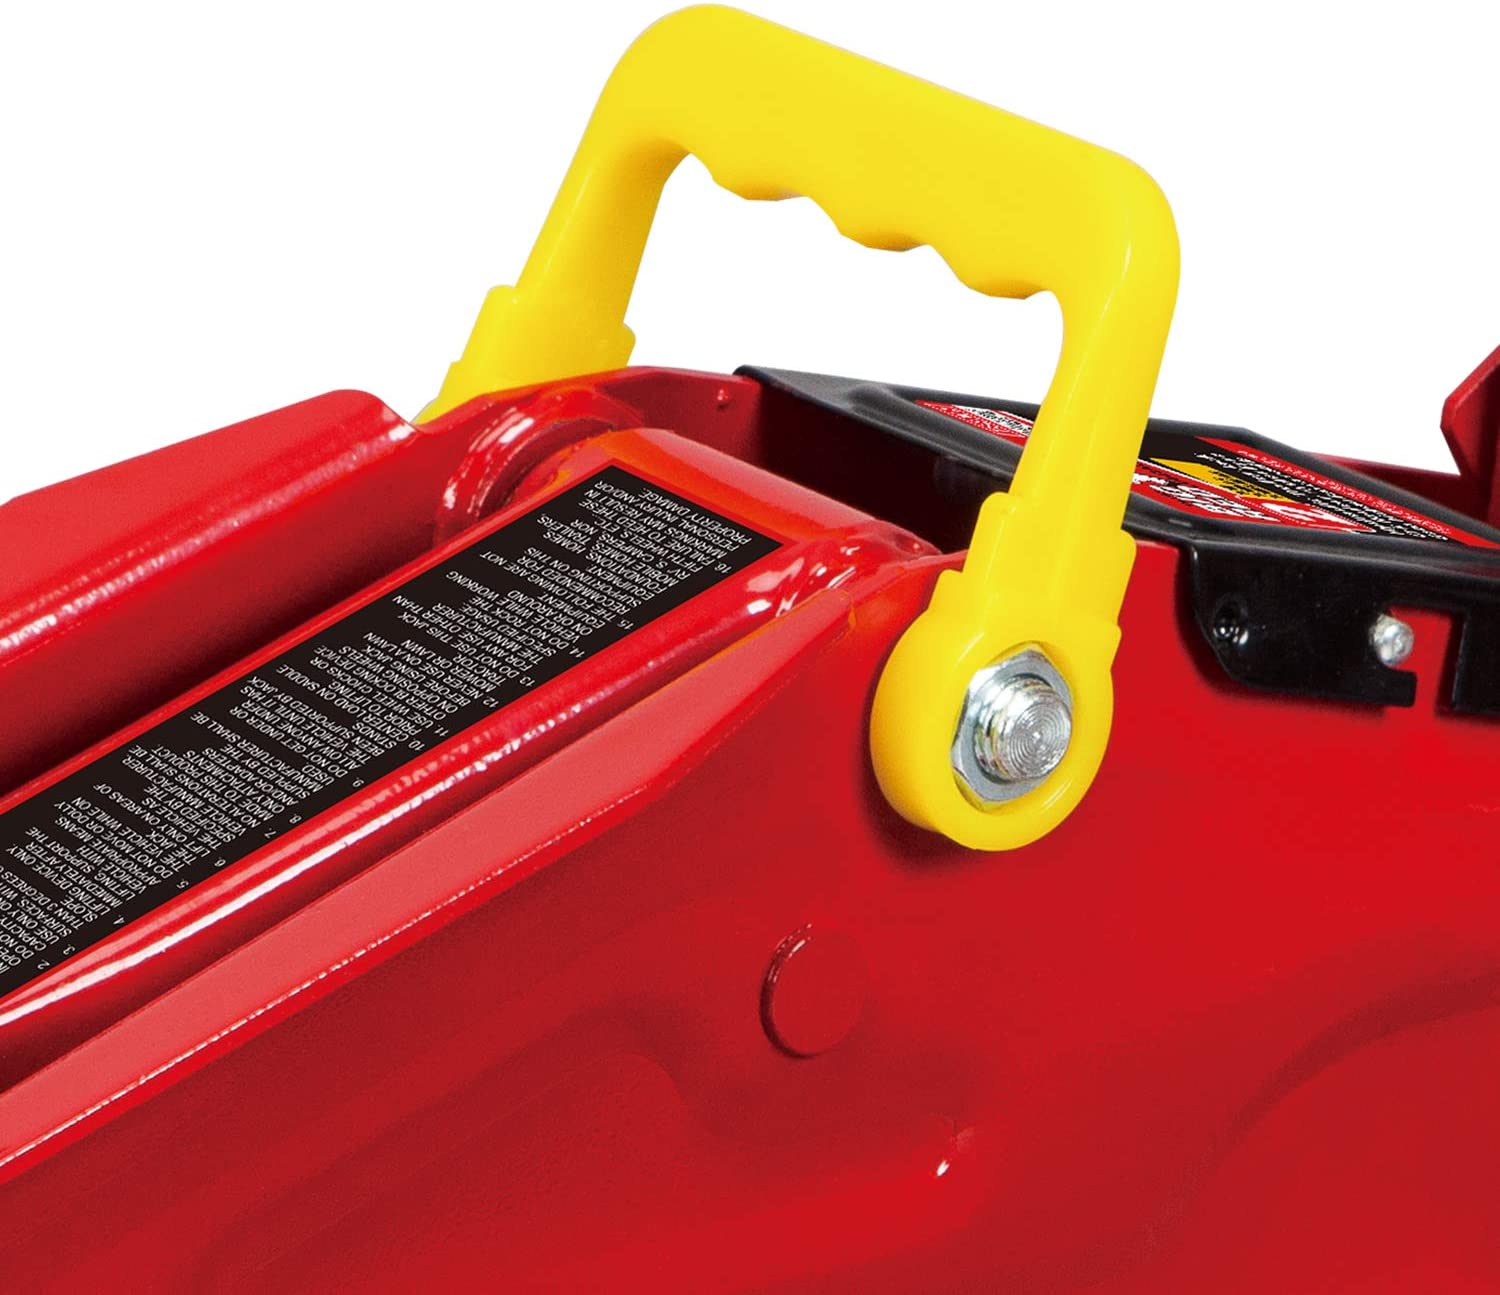 Car Red Torin Hydraulic Trolley Service/Floor Jack 2 Ton Tools